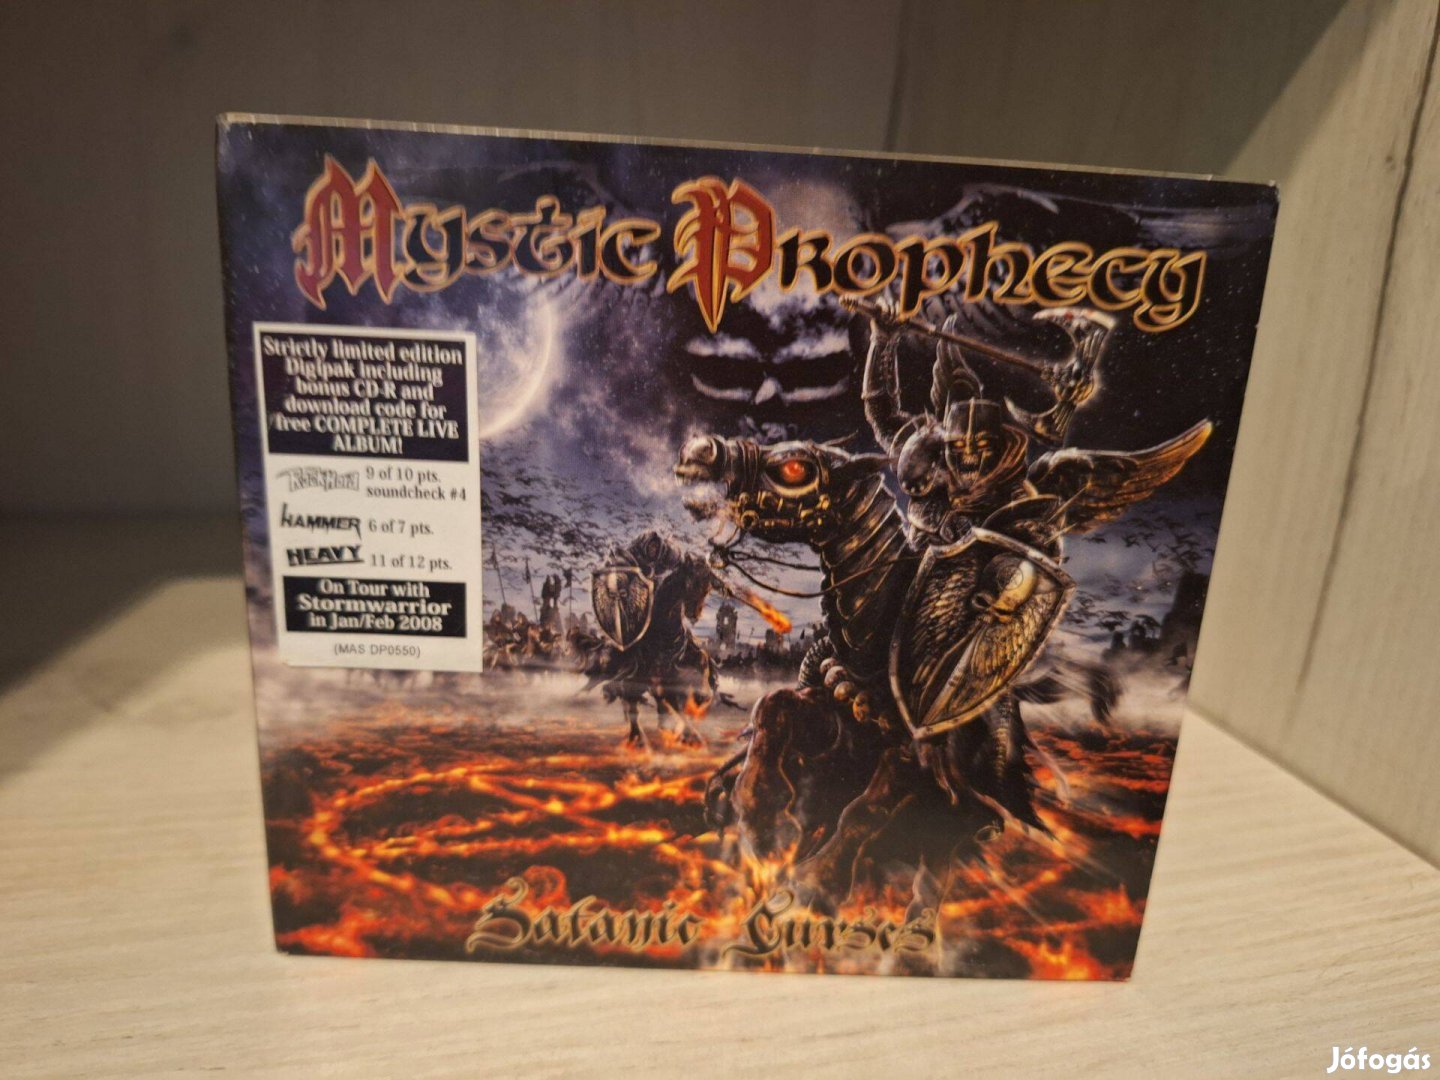 Mystic Prophecy - Satanic Curses CD CD-R Limited Edition, Digipak